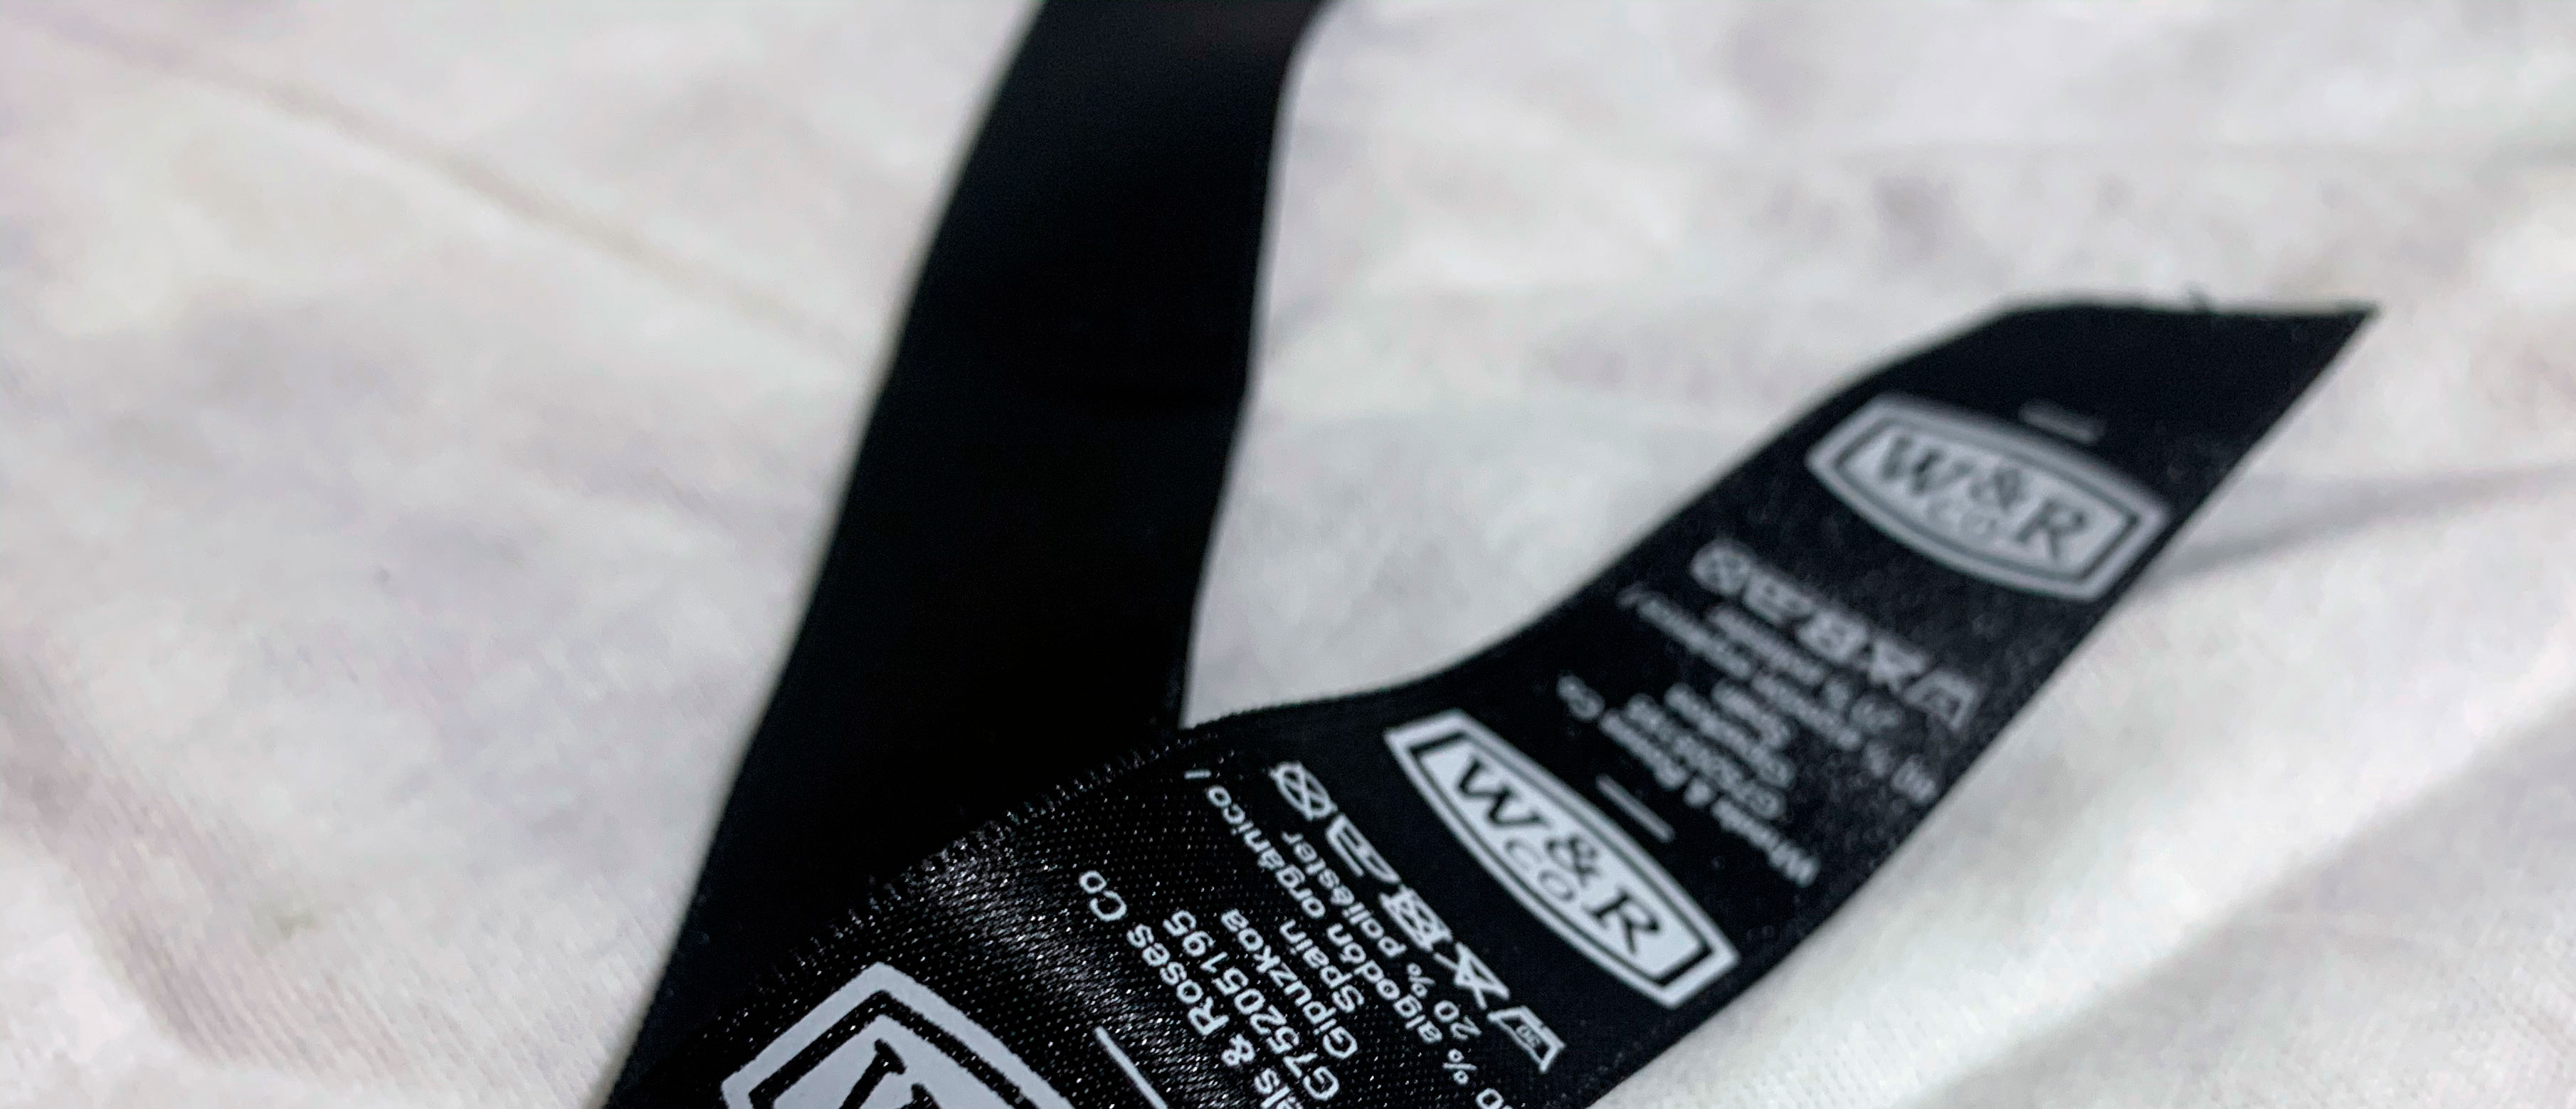 Personalizar etiquetas | Etiquetado de prendas textiles